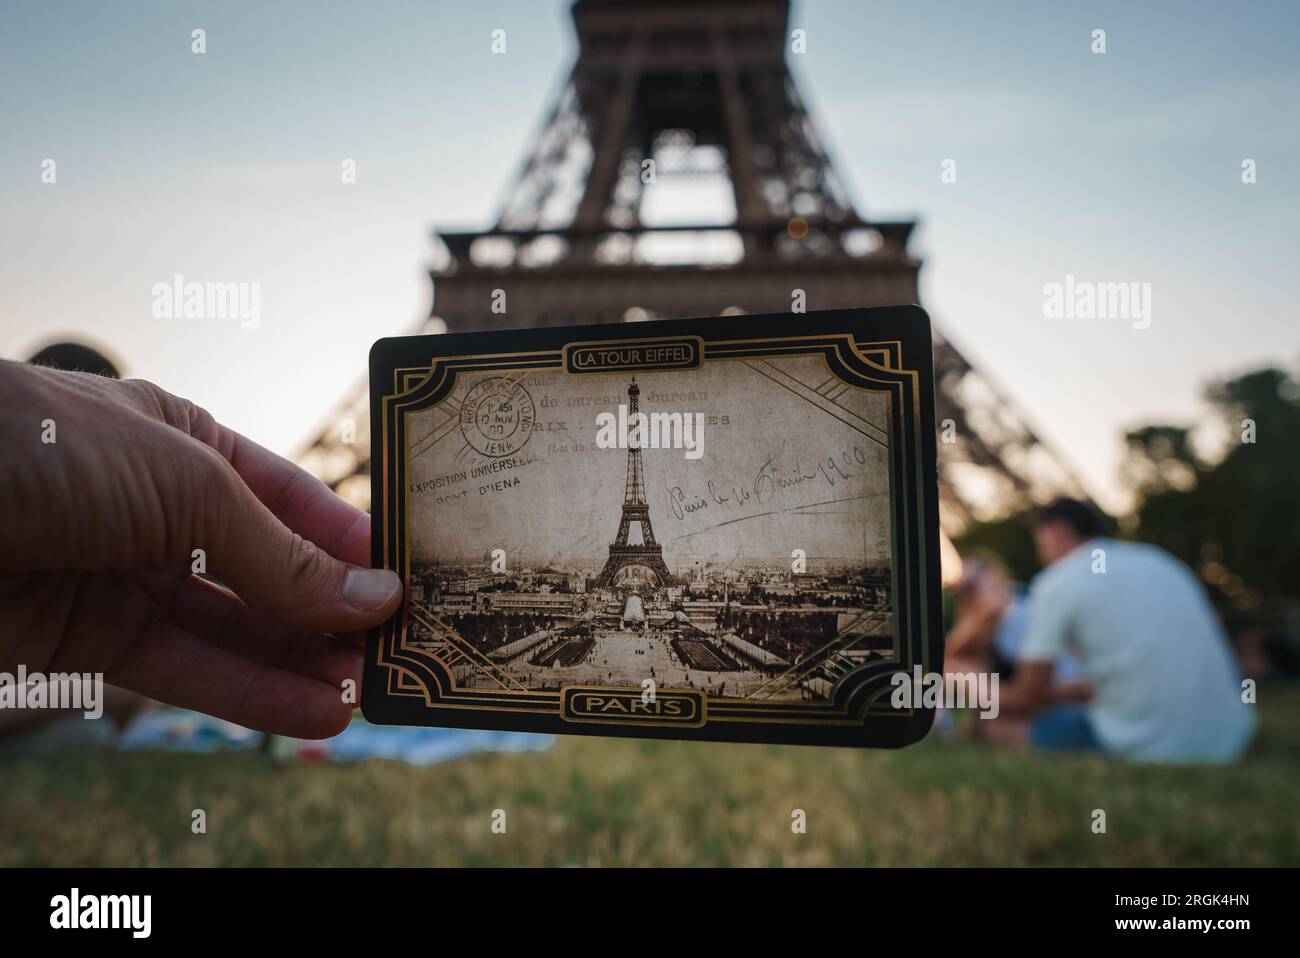 Joyful Display of Vintage Eiffel Tower Photo Stock Photo